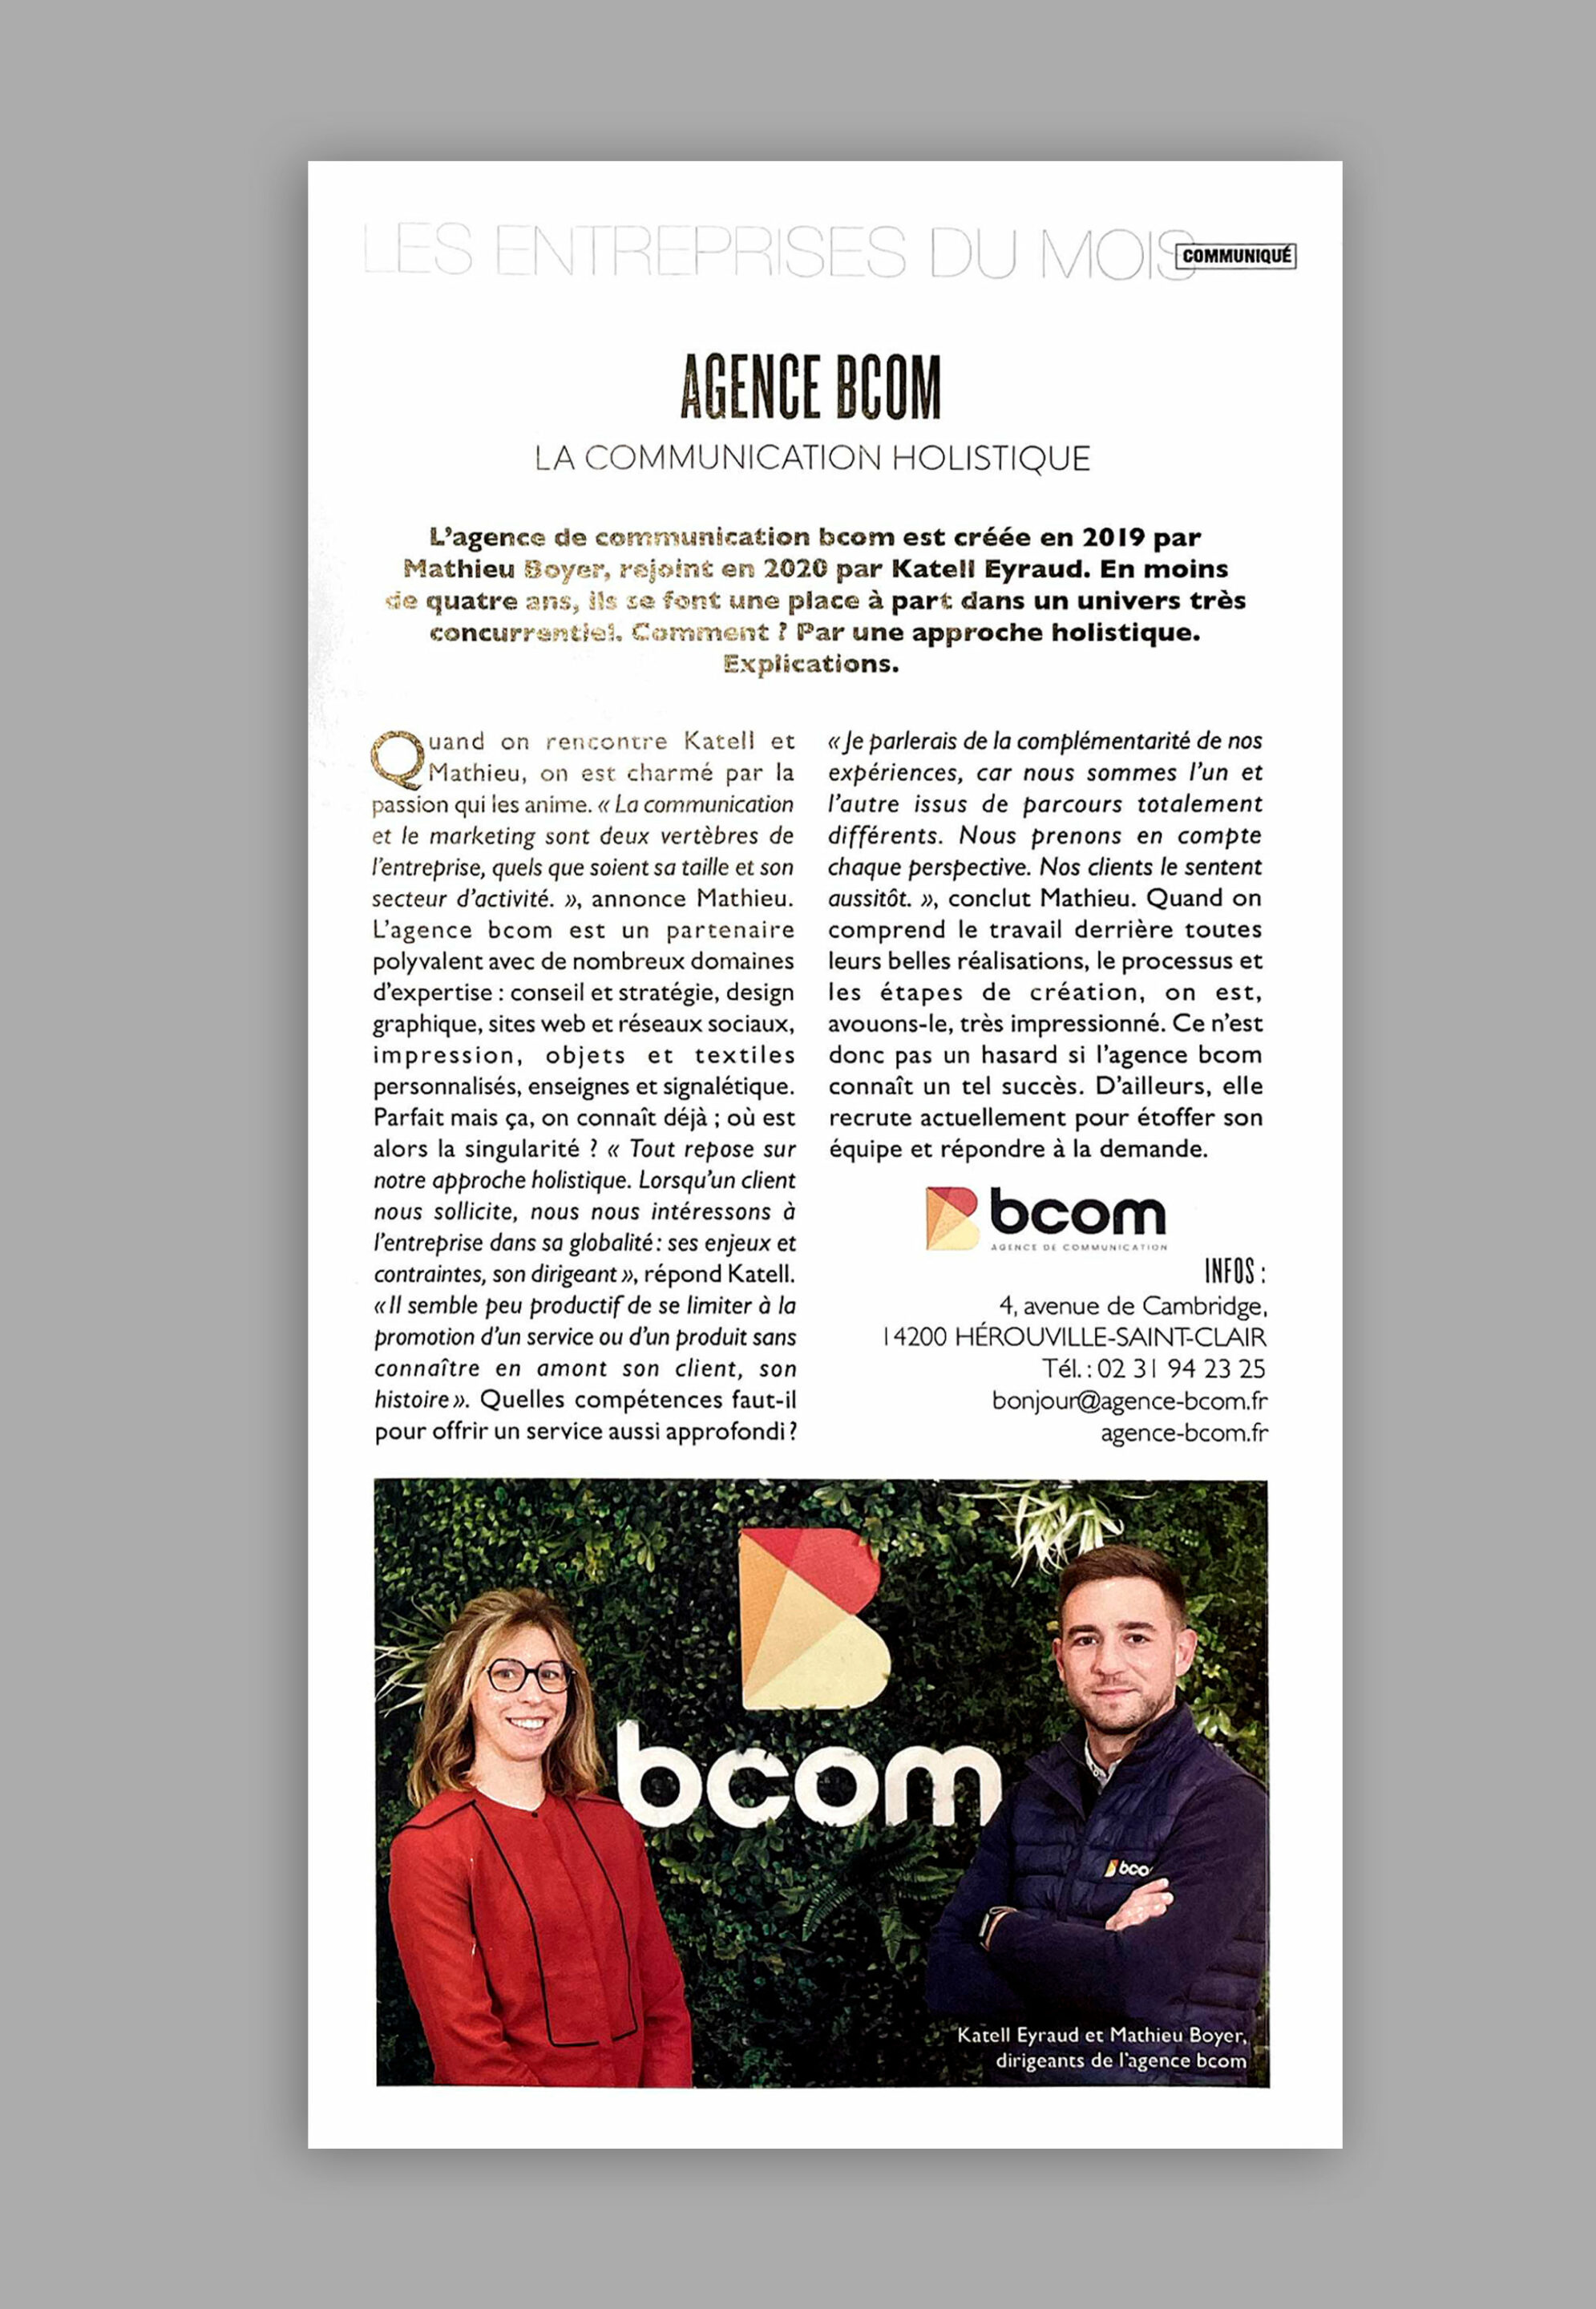 Bcom - agence de communication creee par Mathieu BOYER et Katell EYRAUD